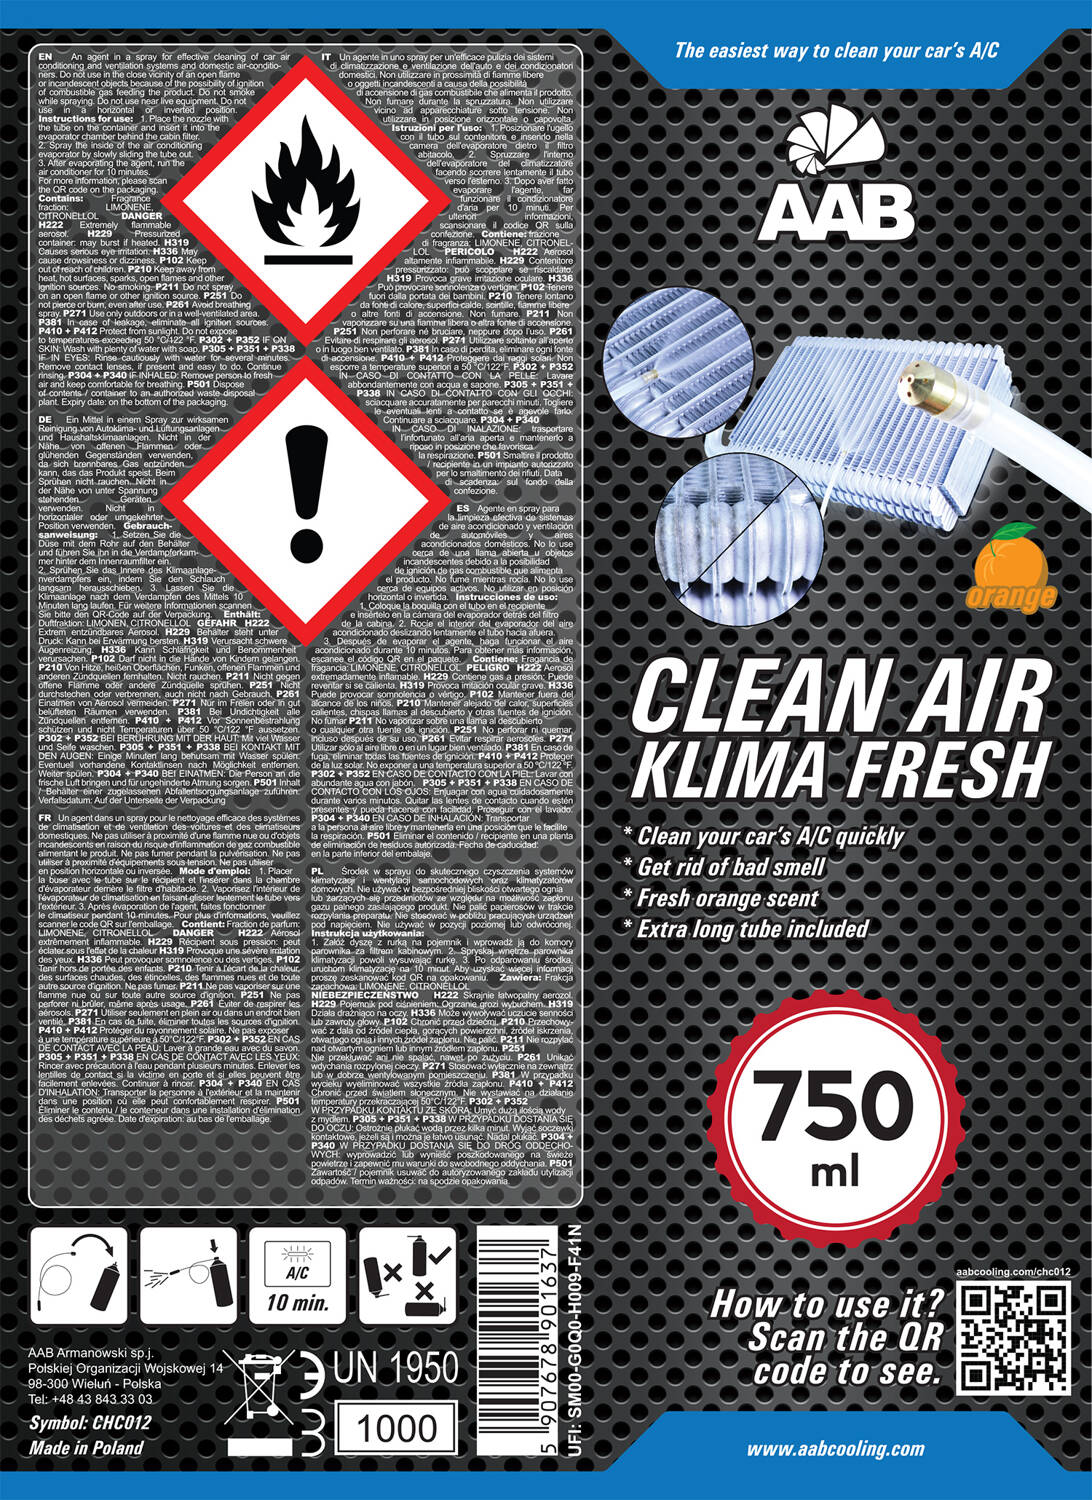 aab_clean_air_klima_fresh_penetrating_foam_750ml_dsc_6996